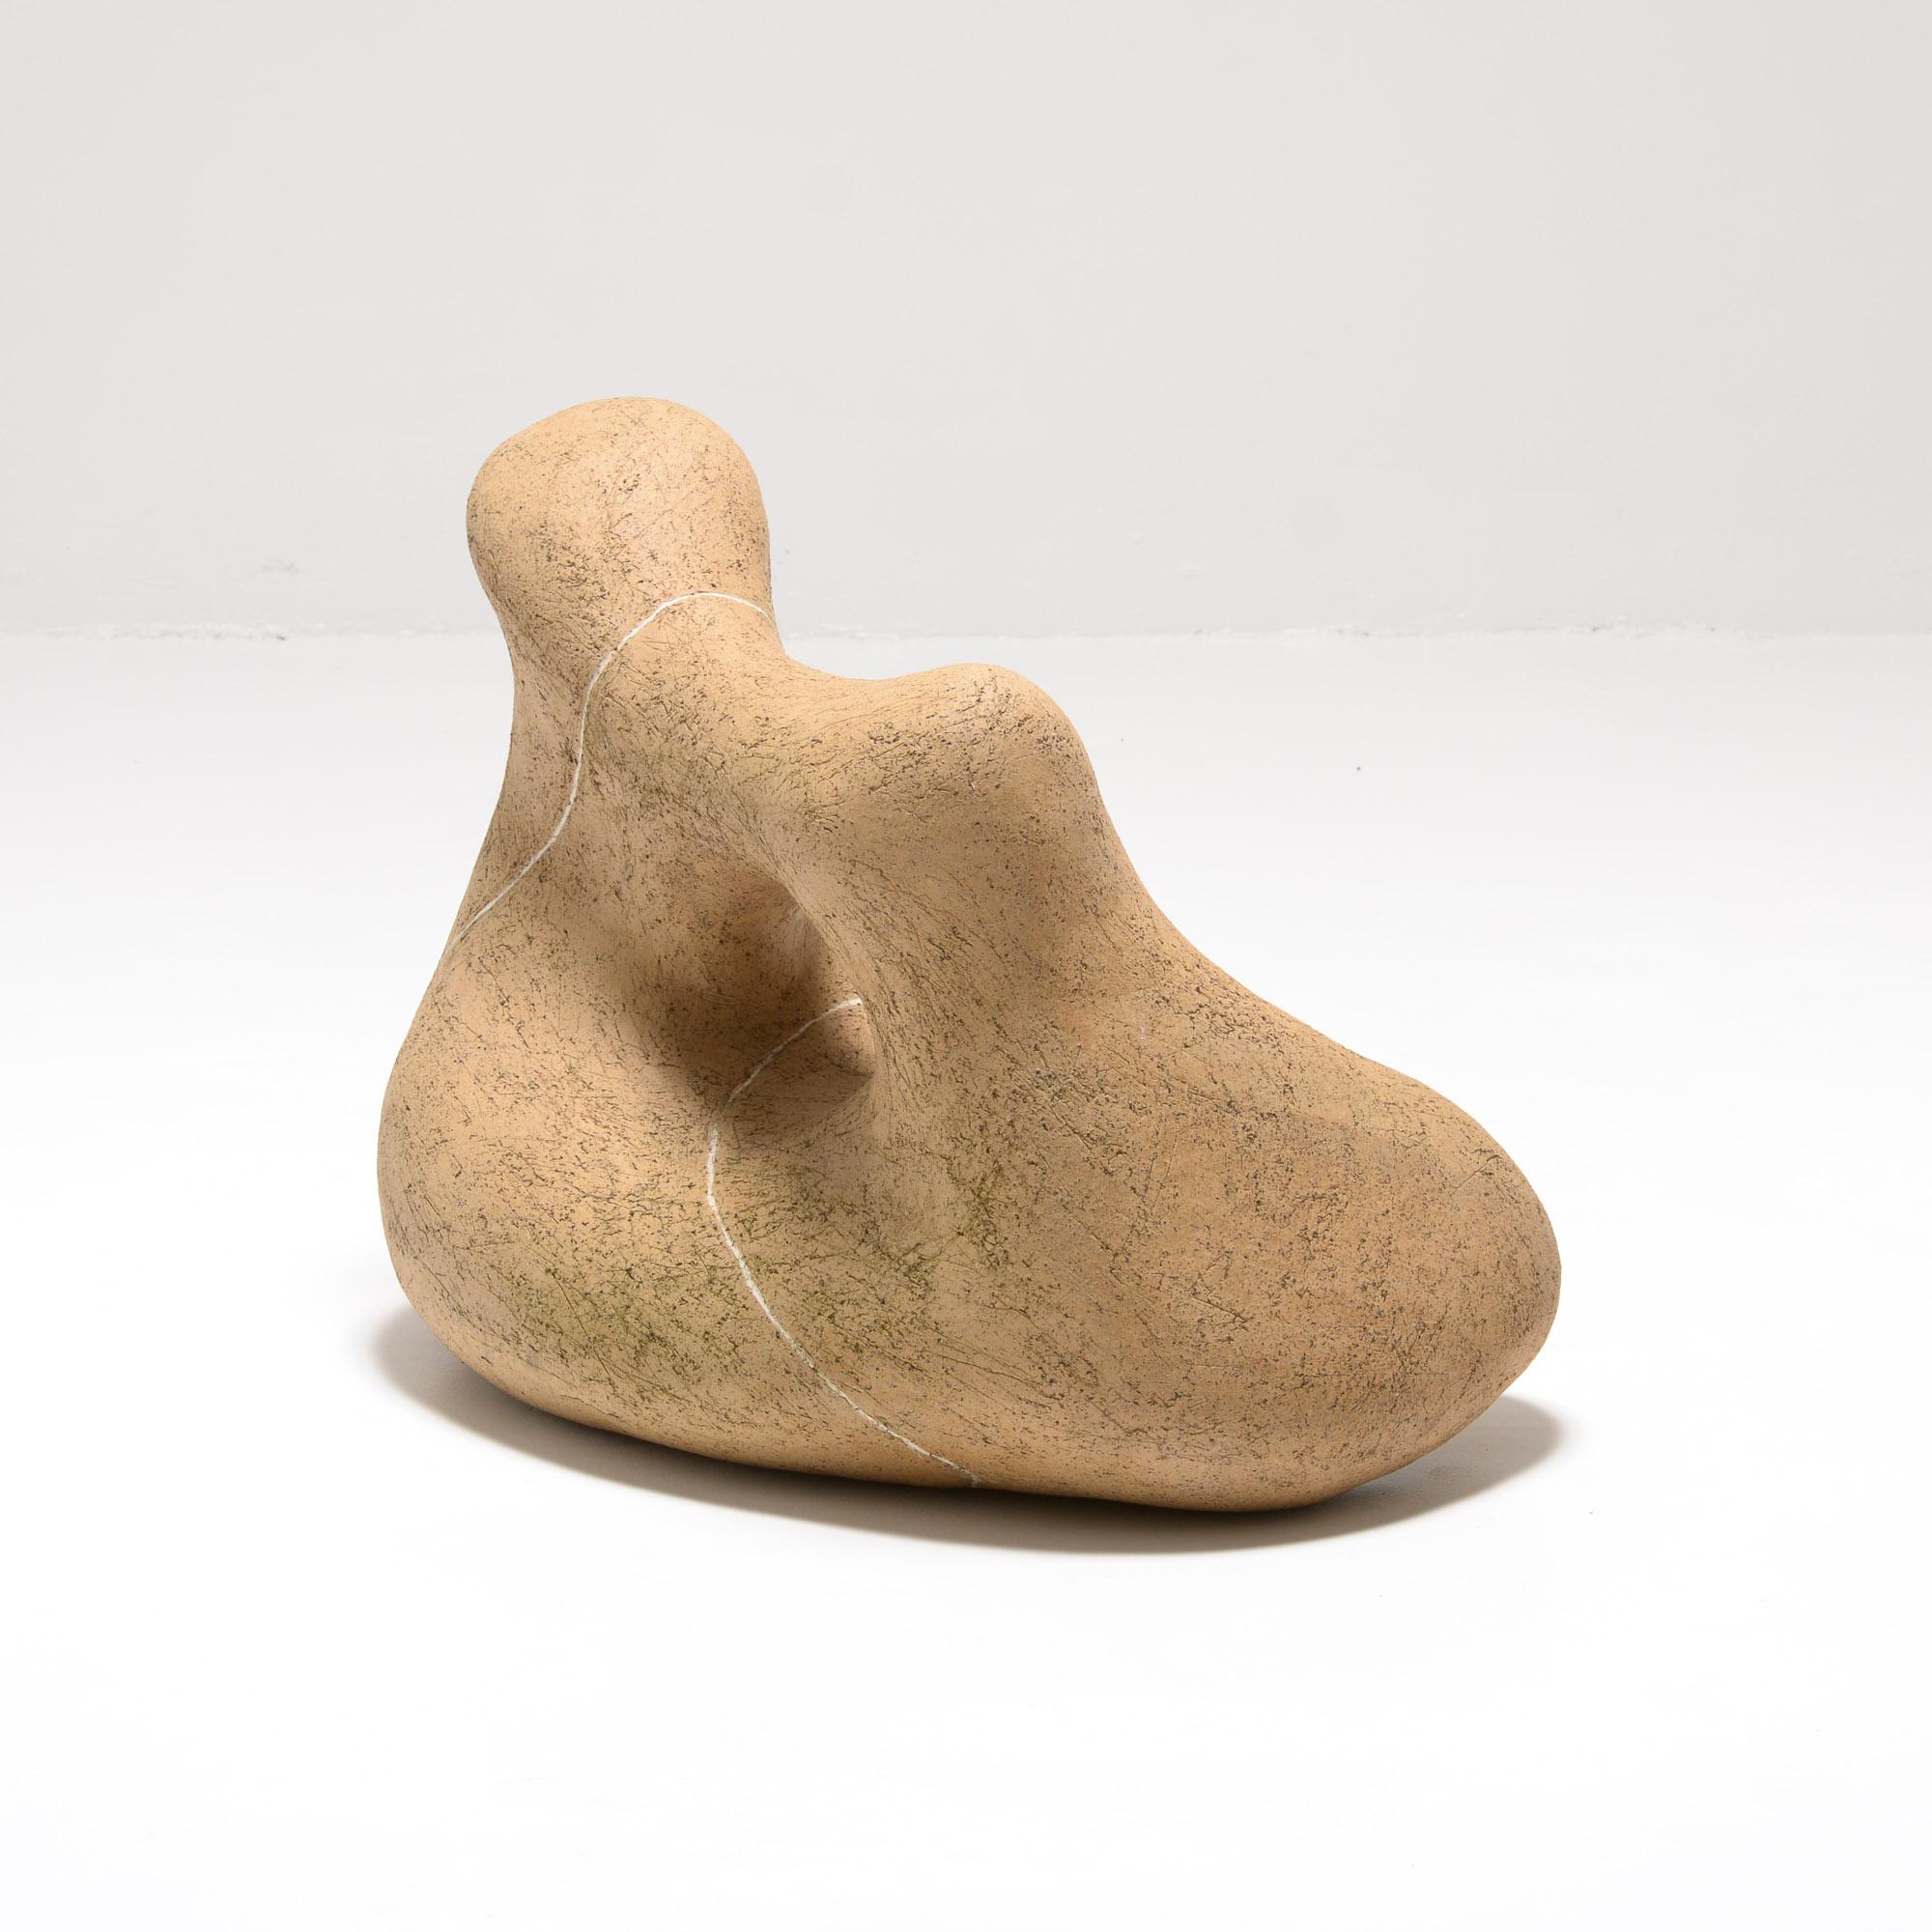 Contemporary Large Ceramic Sculpture, Dancing Stone 2, by Sabine Vermetten